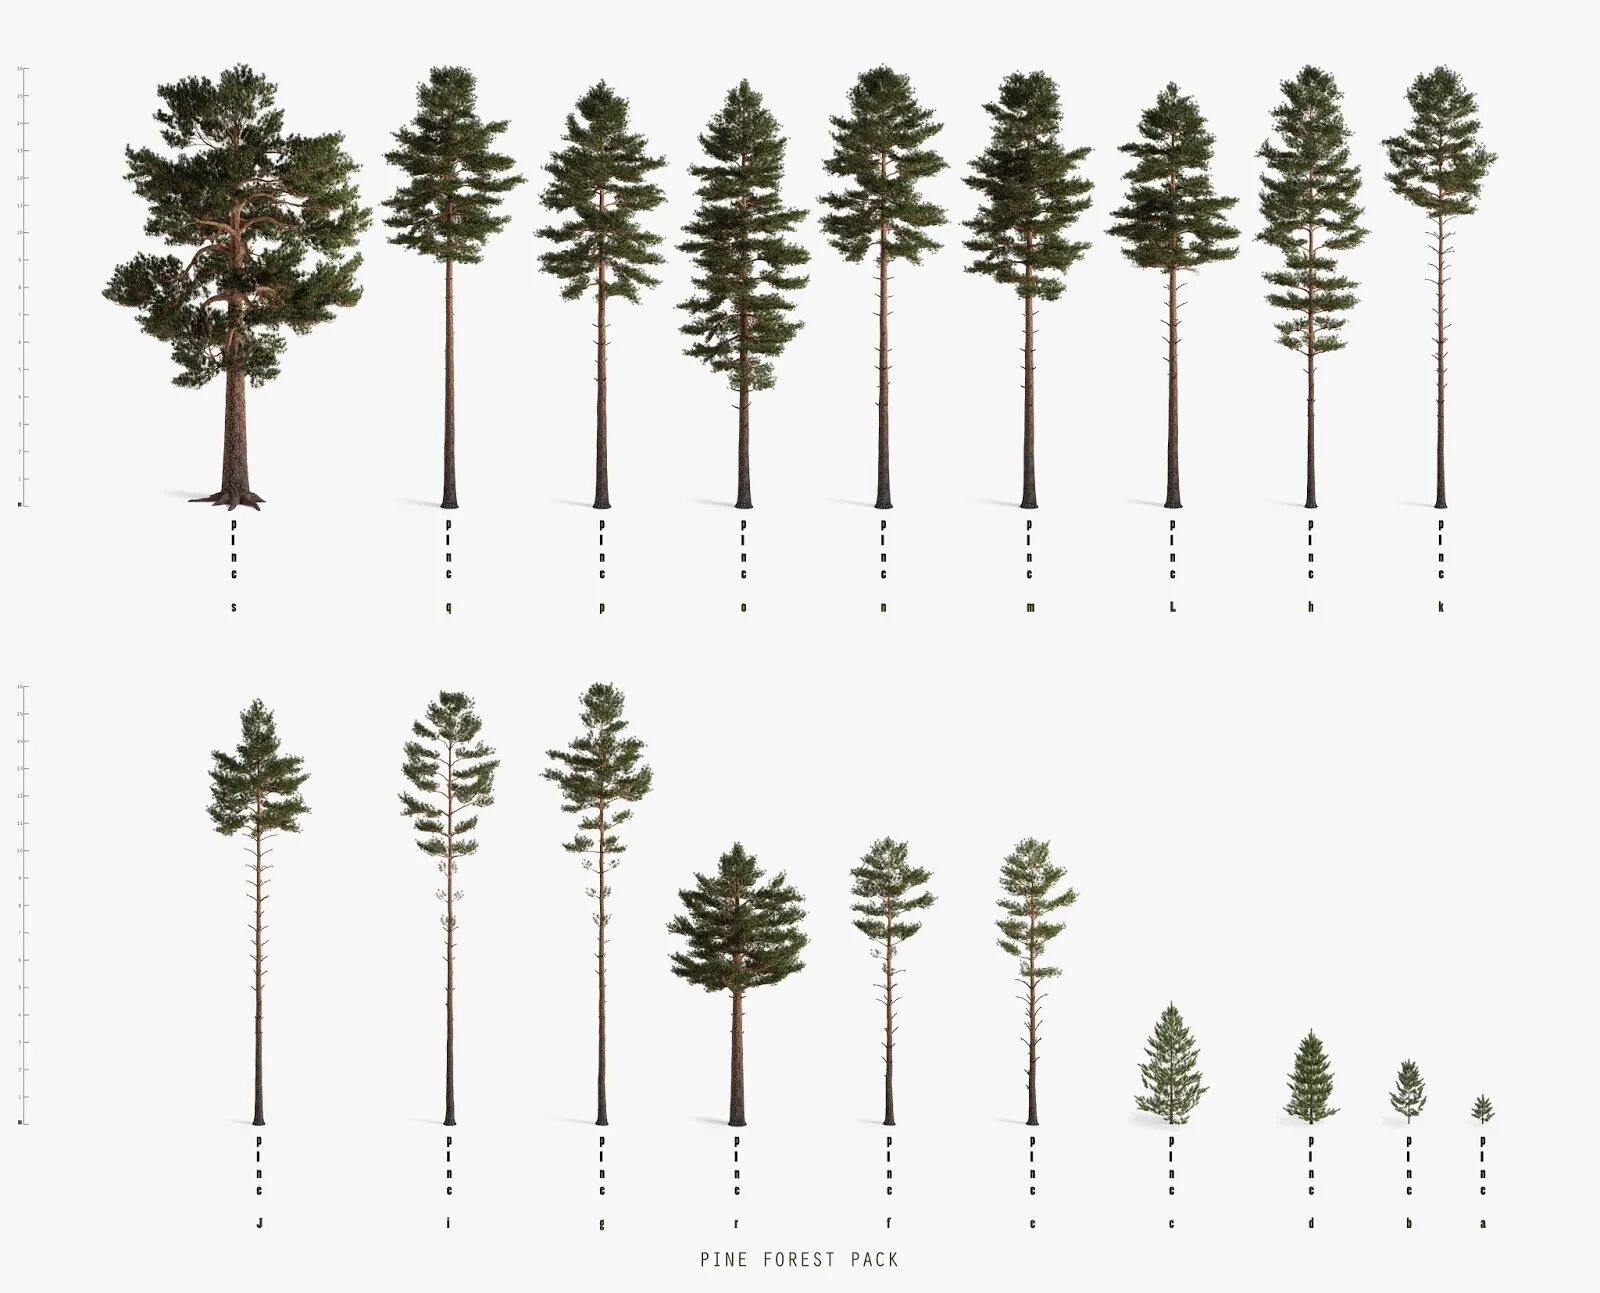 Forest Pack. Pine Forest Pack. Forest Pine arch1t3ct, альбом Forest Pine. Sporagine Pine. Сосна группа организмов